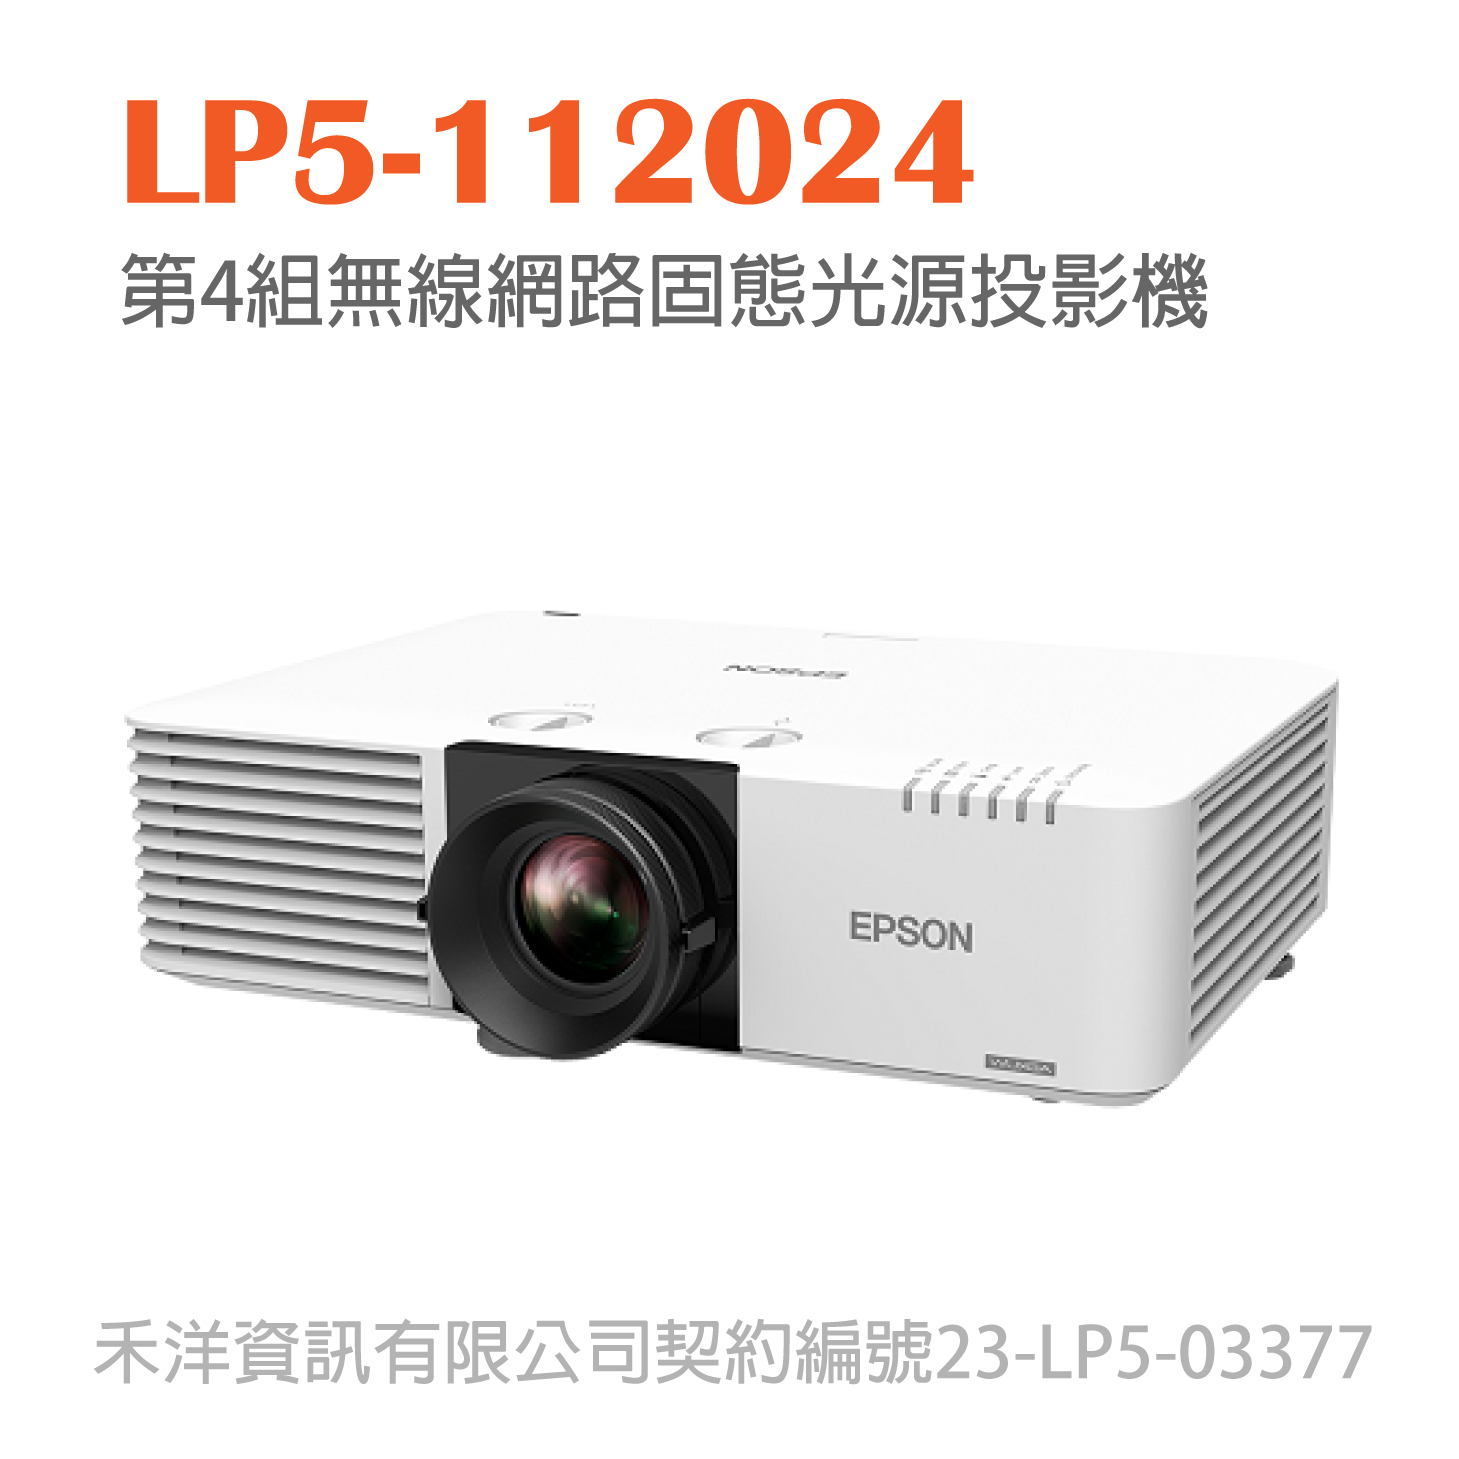 LP5-112024 台銀投影機標 第4組無線網路固態光源投影機